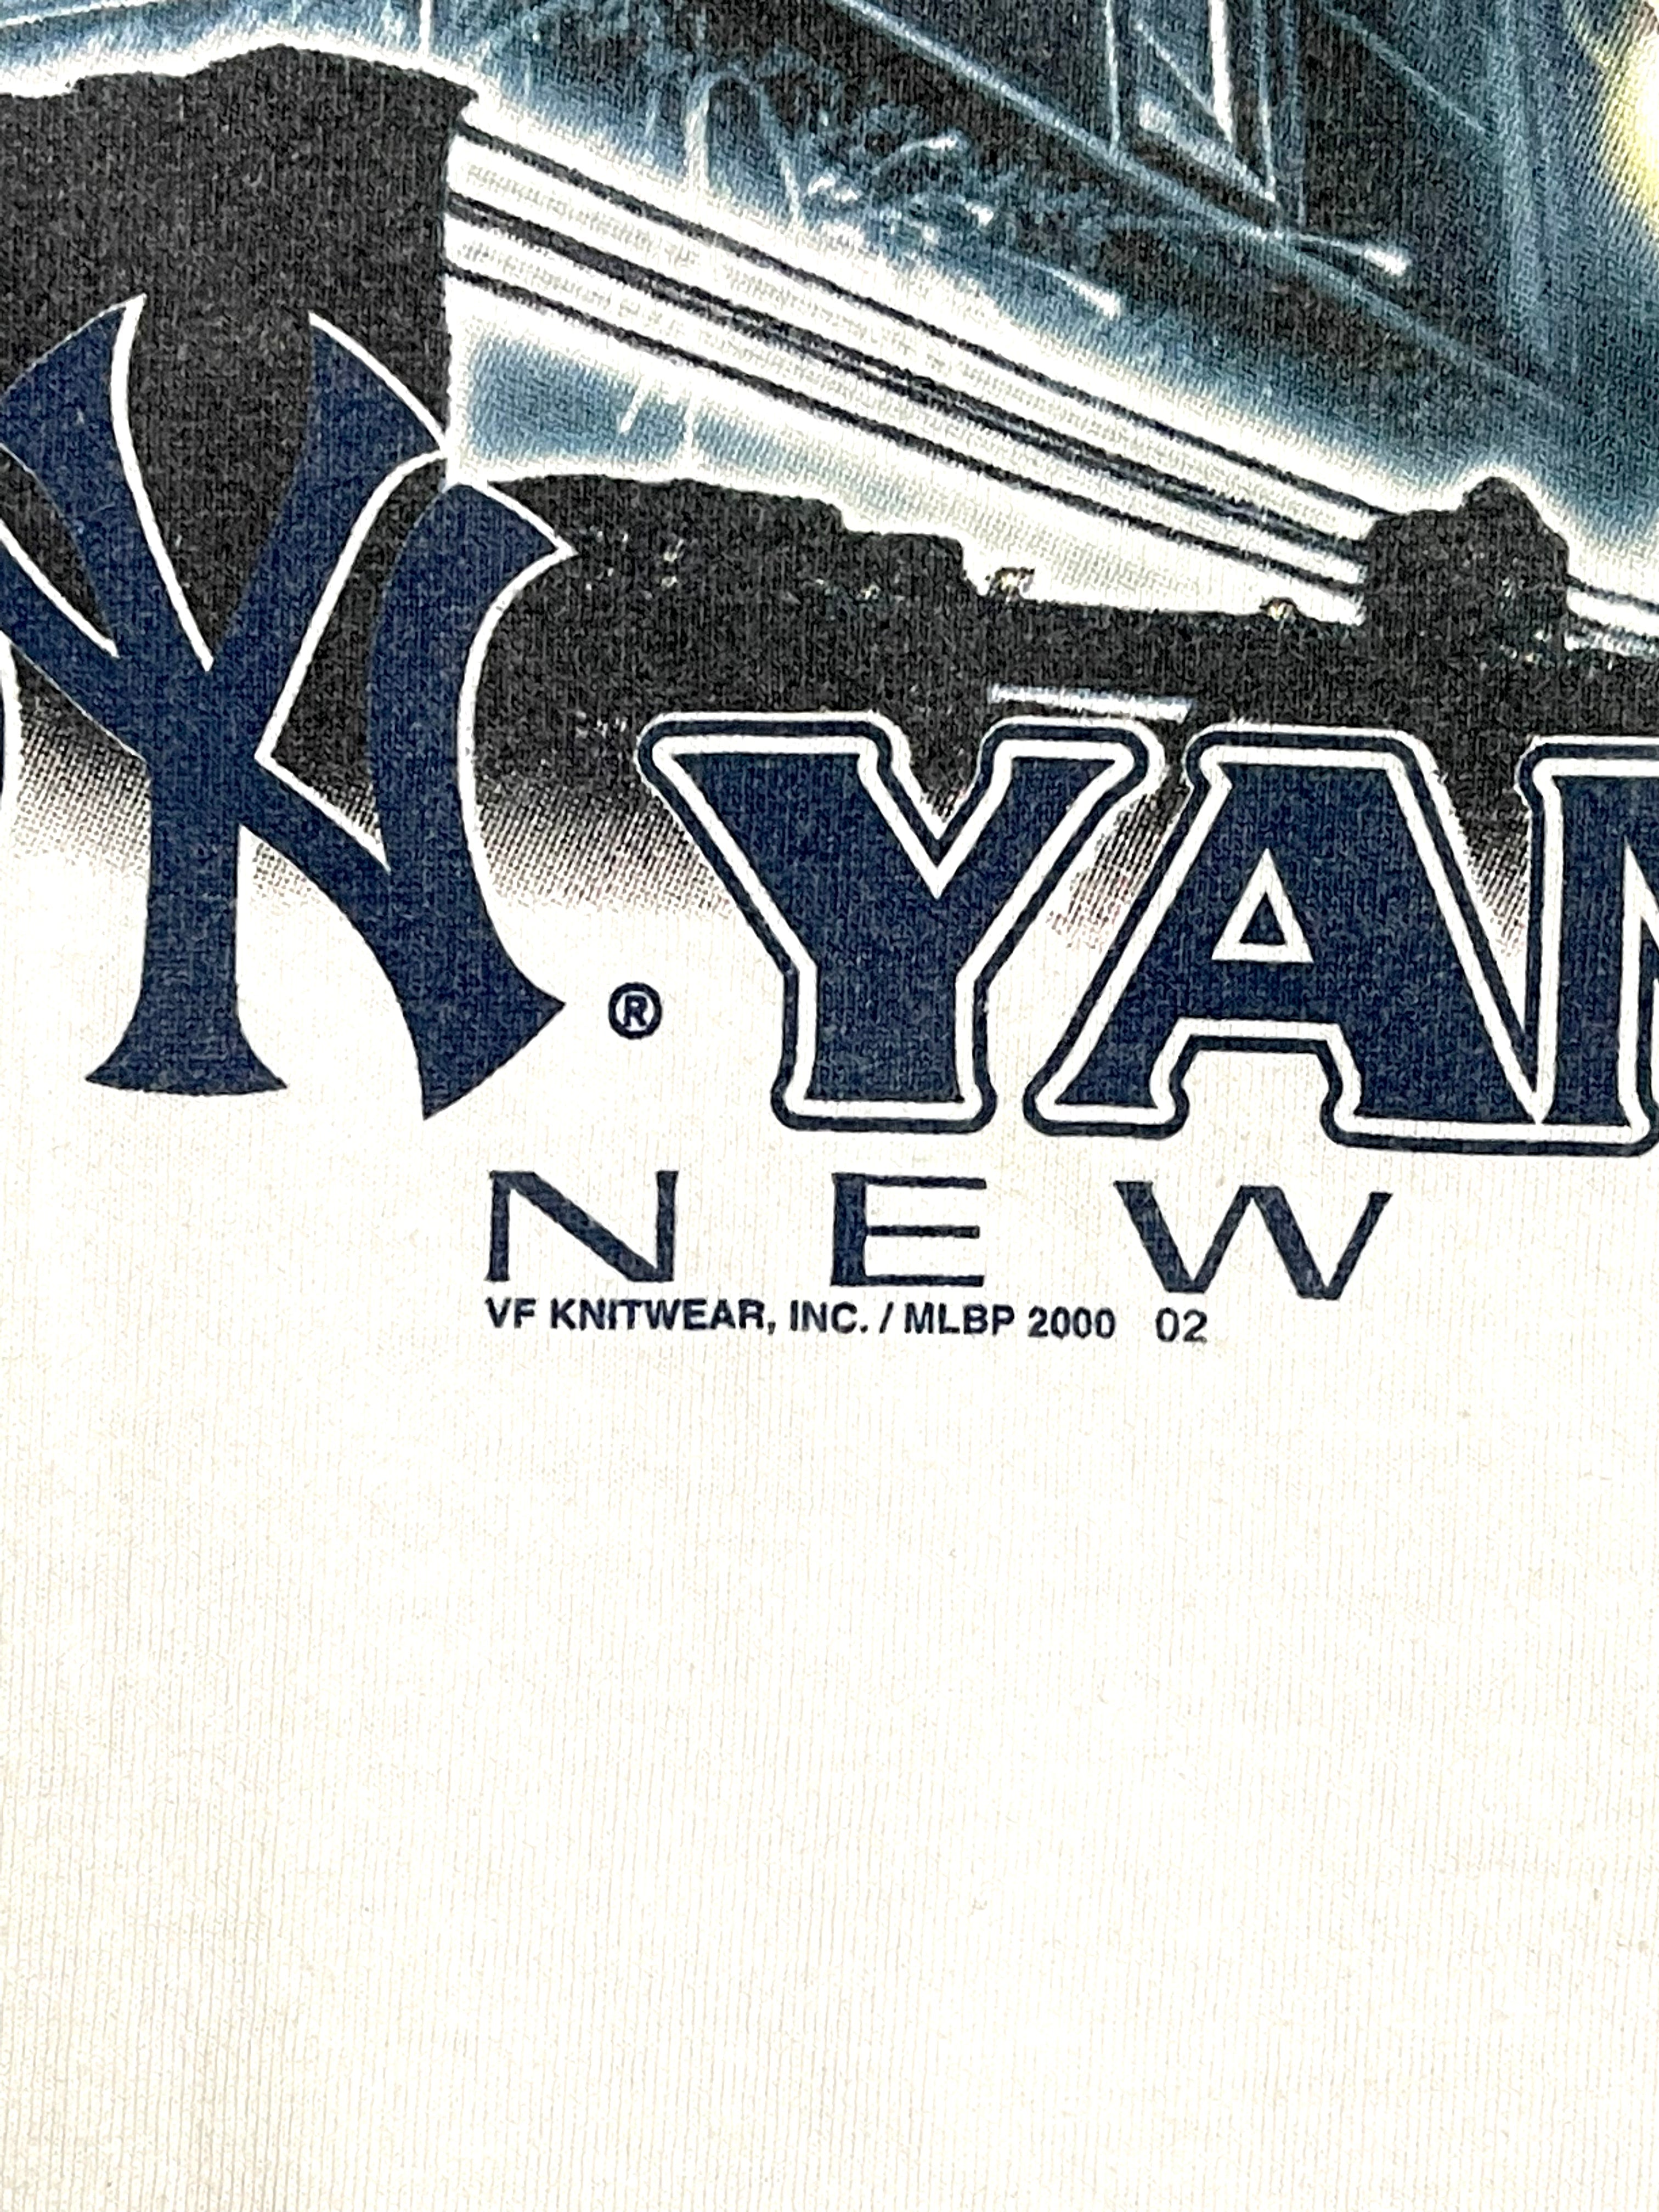 Vintage Yankees 2000 World Series Champions T-Shirt